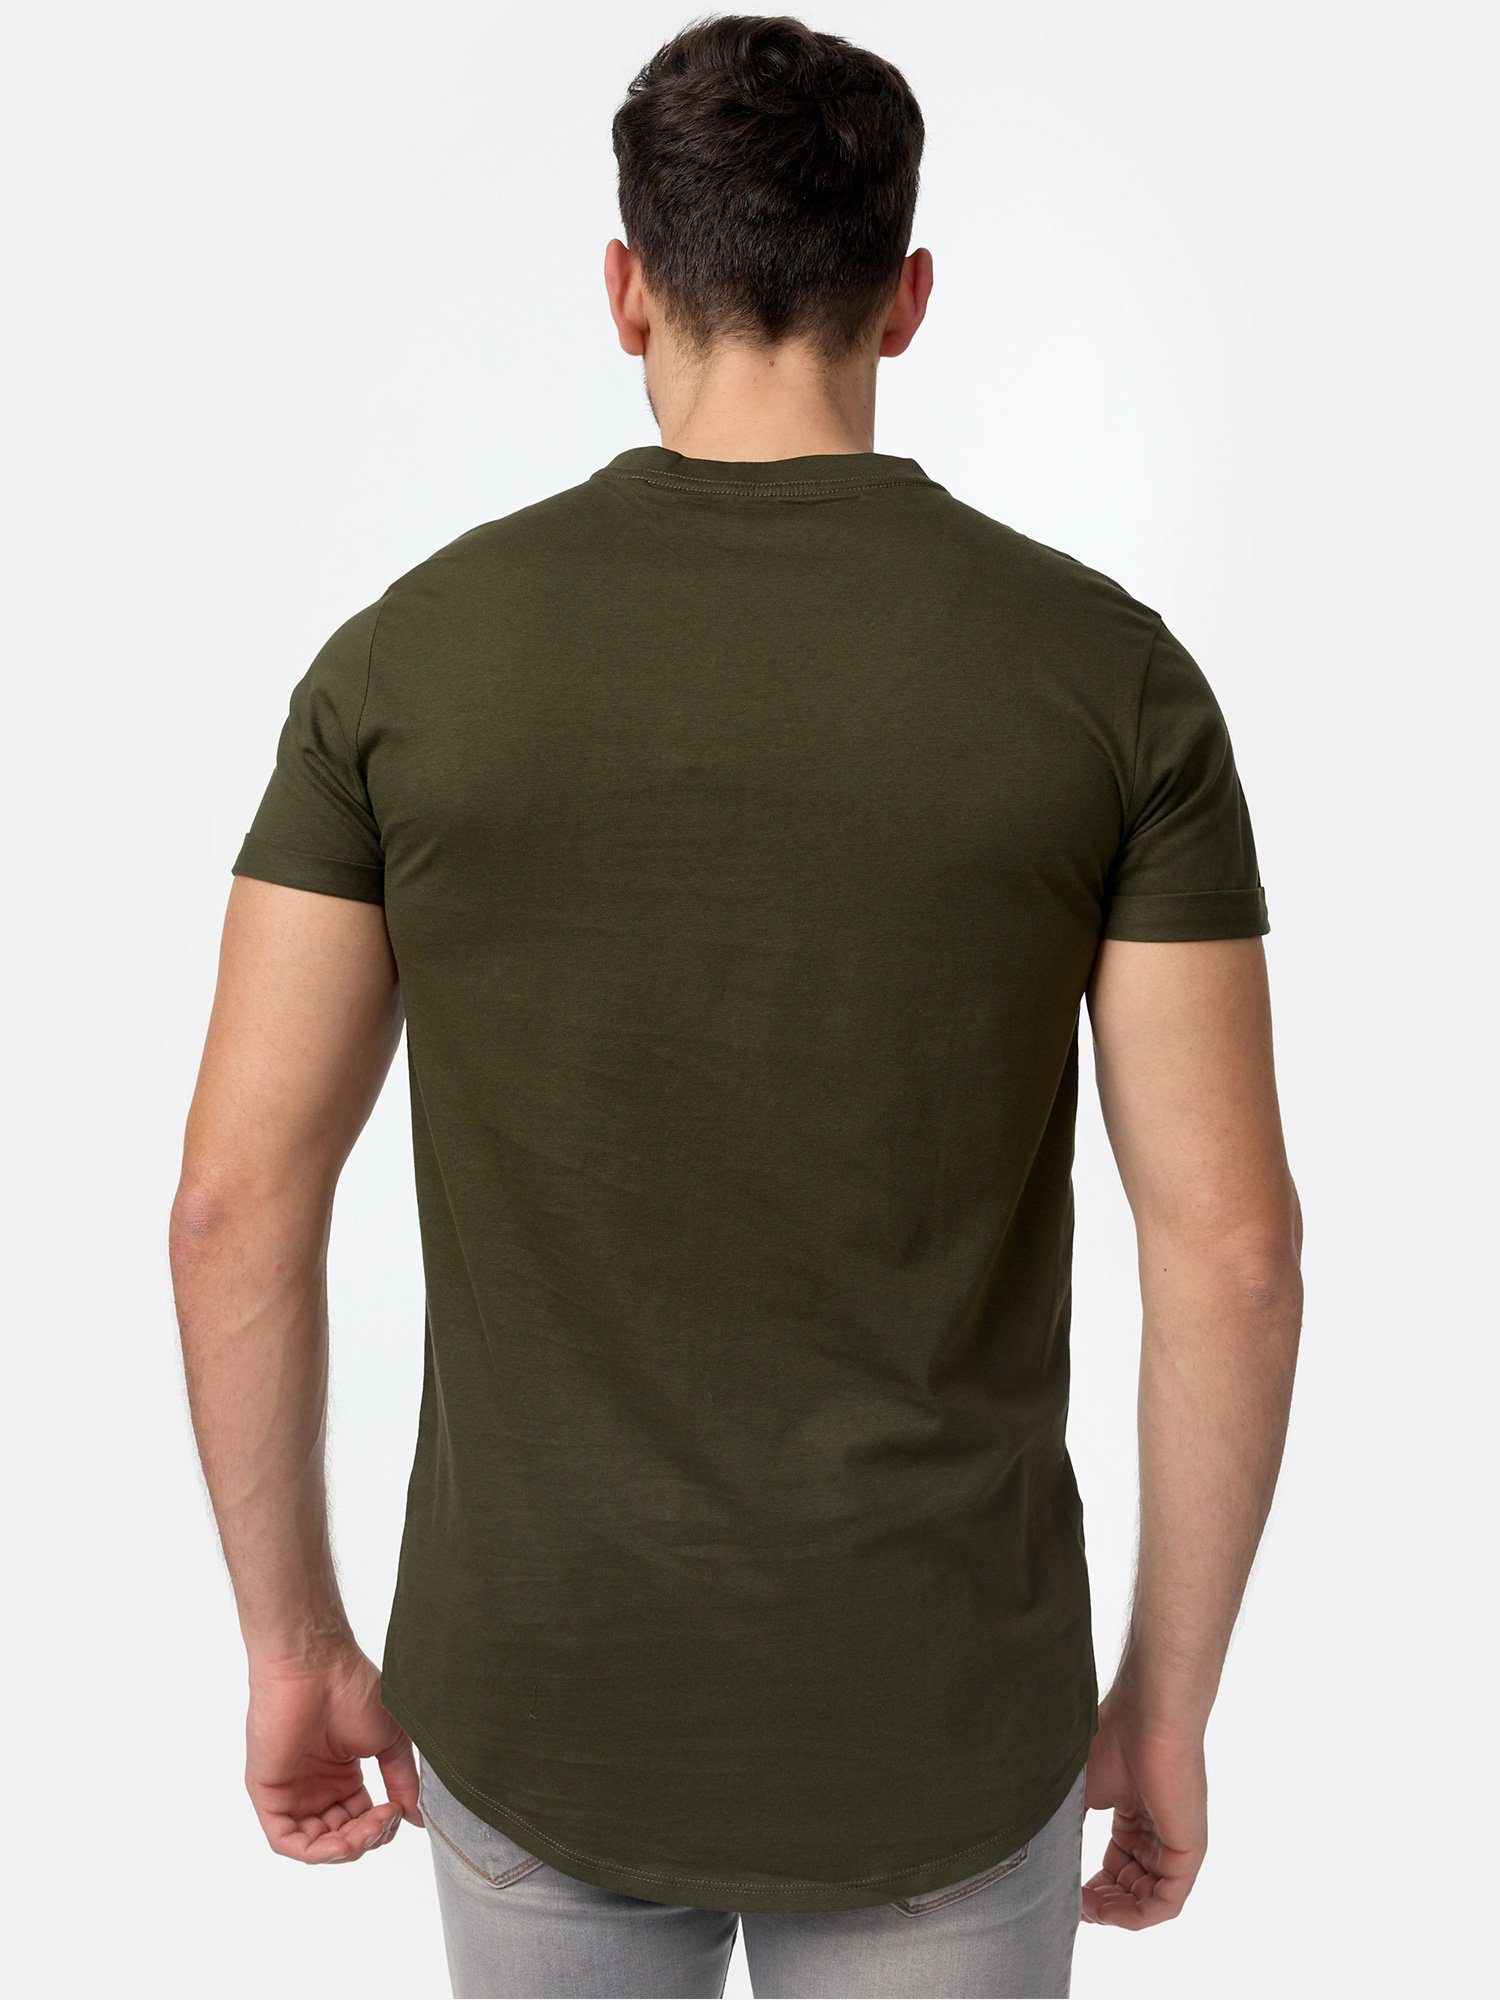 Rundhalsshirt T-Shirt Tazzio khaki Herren Basic E105